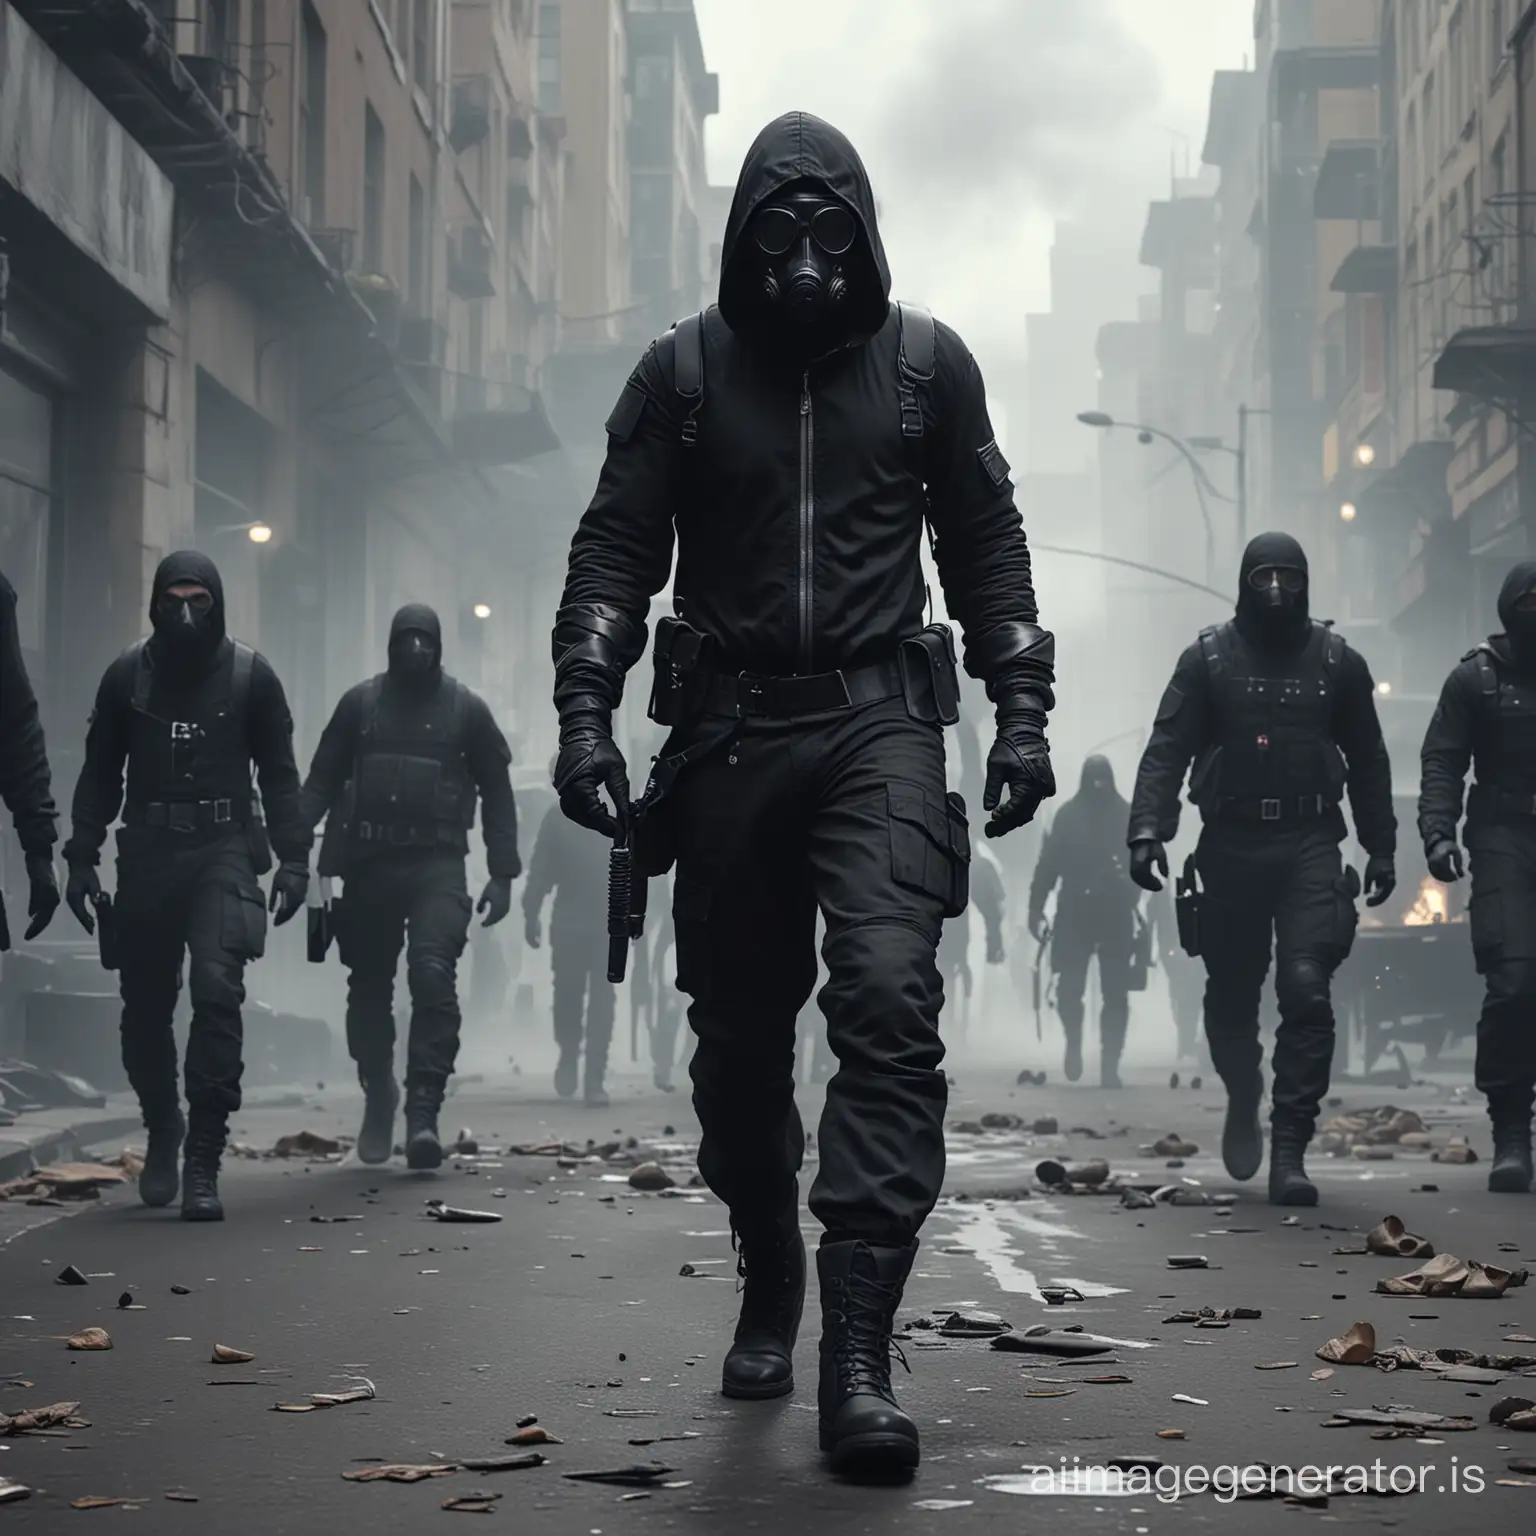 Urban-Warfare-Scene-BlackClad-Soldier-with-Squad-in-Gas-Masks